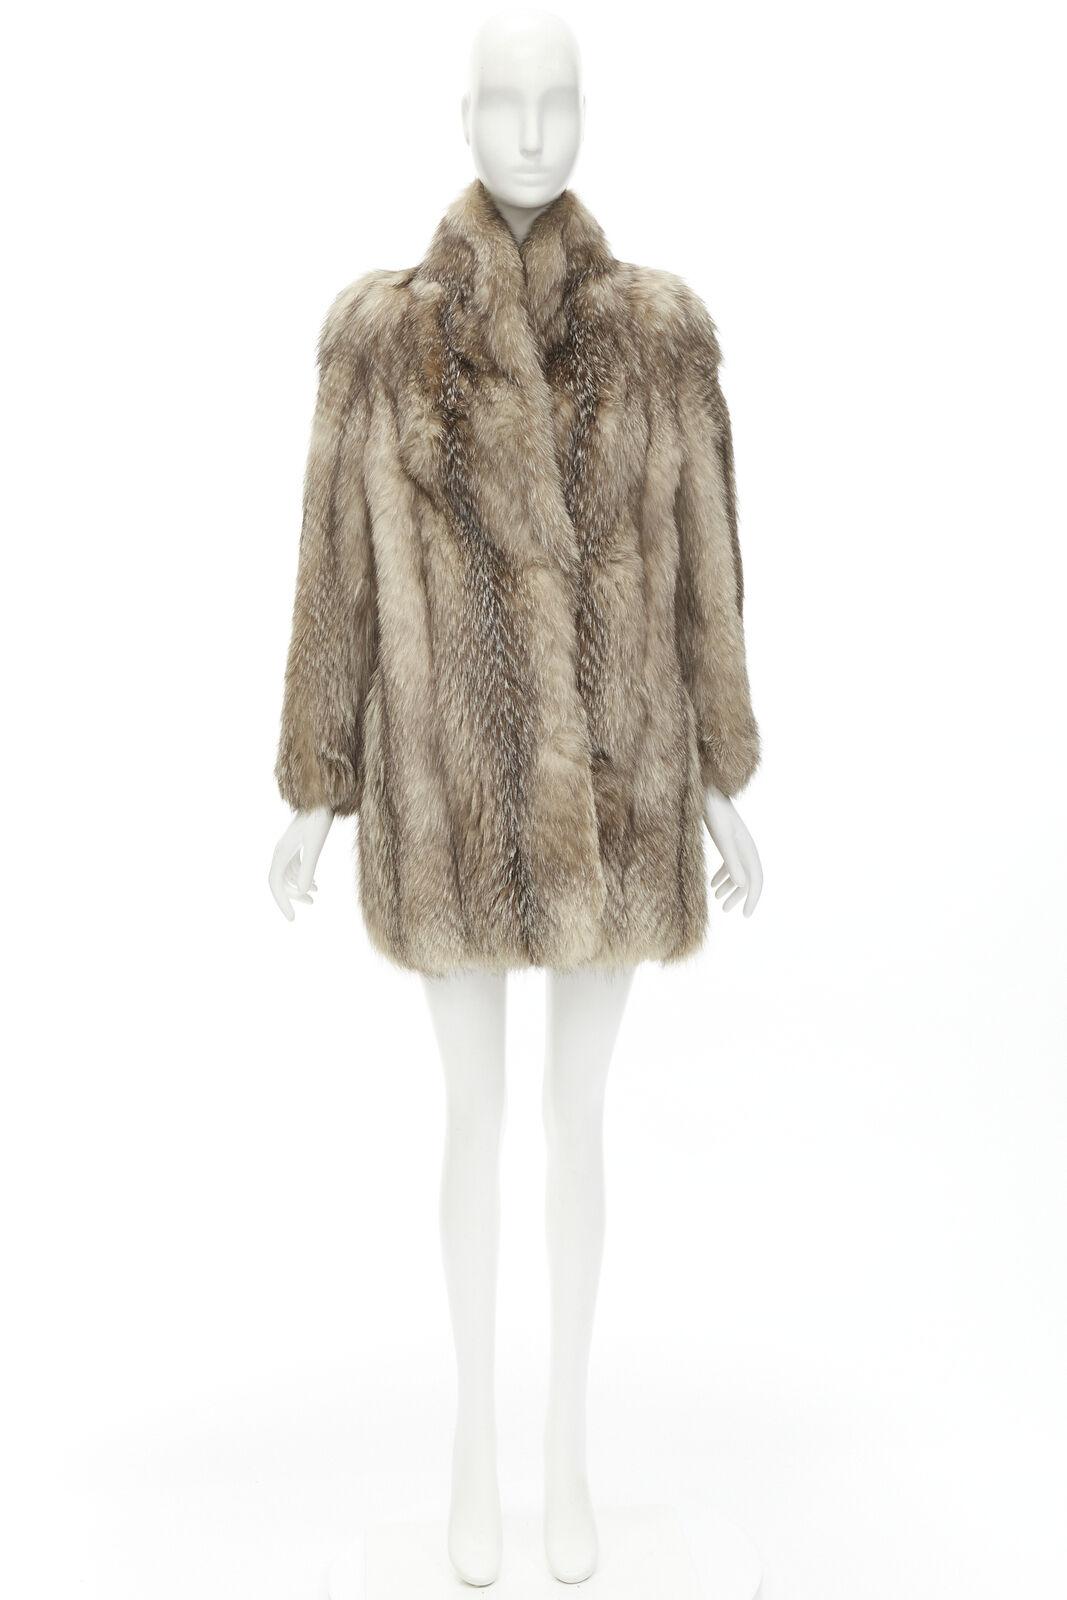 CORNELIUS brown fur shawl collar long sleeve hook eye fur jacket For Sale 6